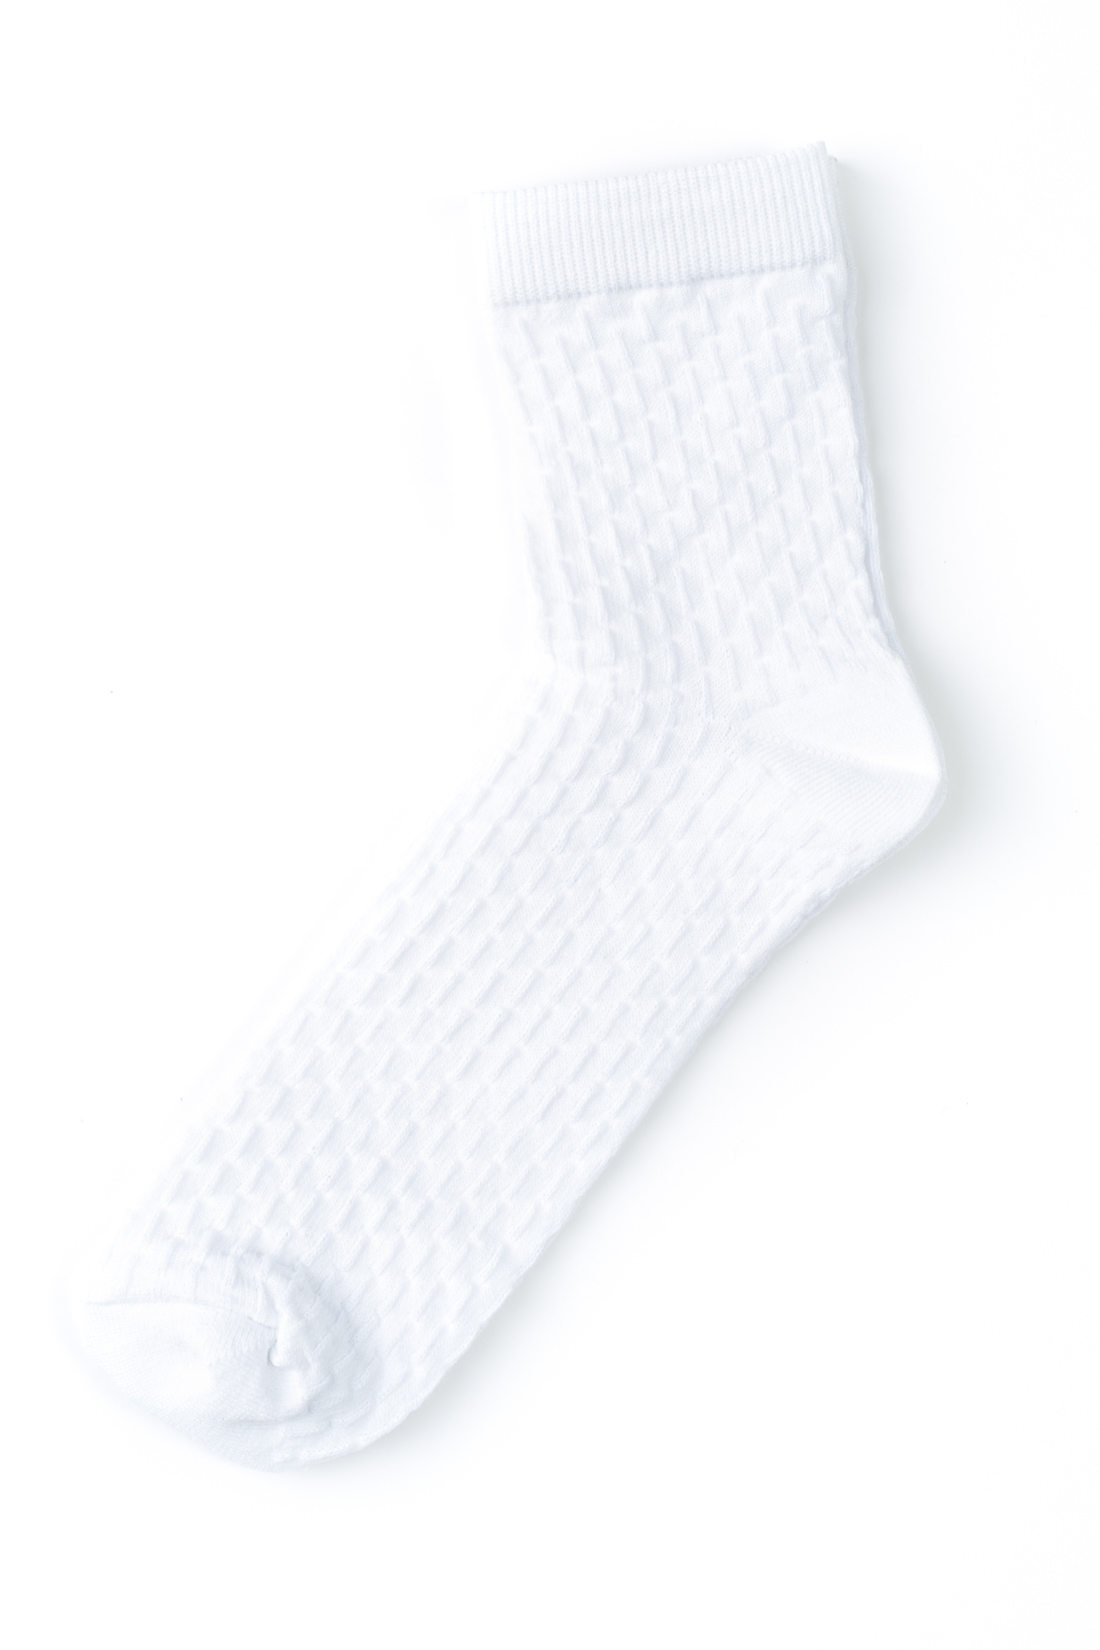 Белые носки с узором (арт. baon B397017), размер 35/37, цвет белый Белые носки с узором (арт. baon B397017) - фото 1